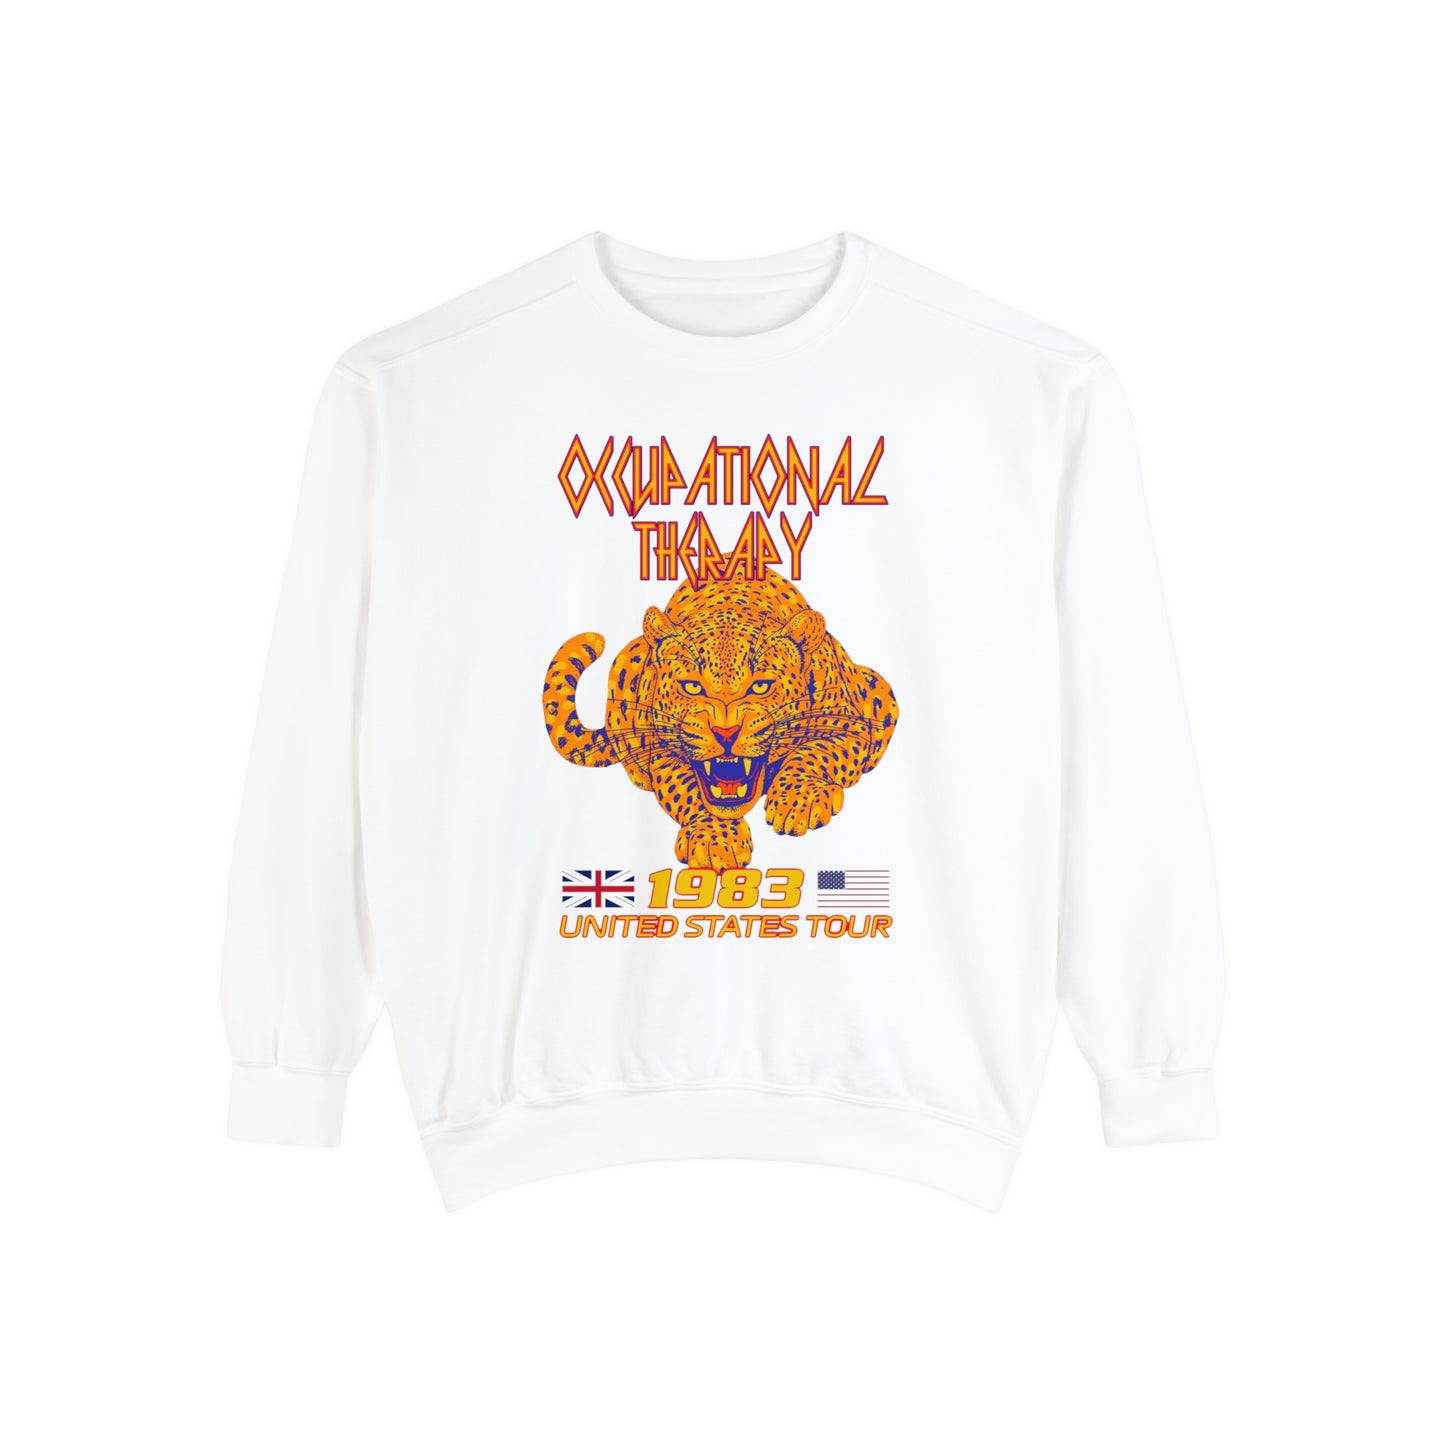 Def OT Band Inspired Comfort Colors Sweatshirt